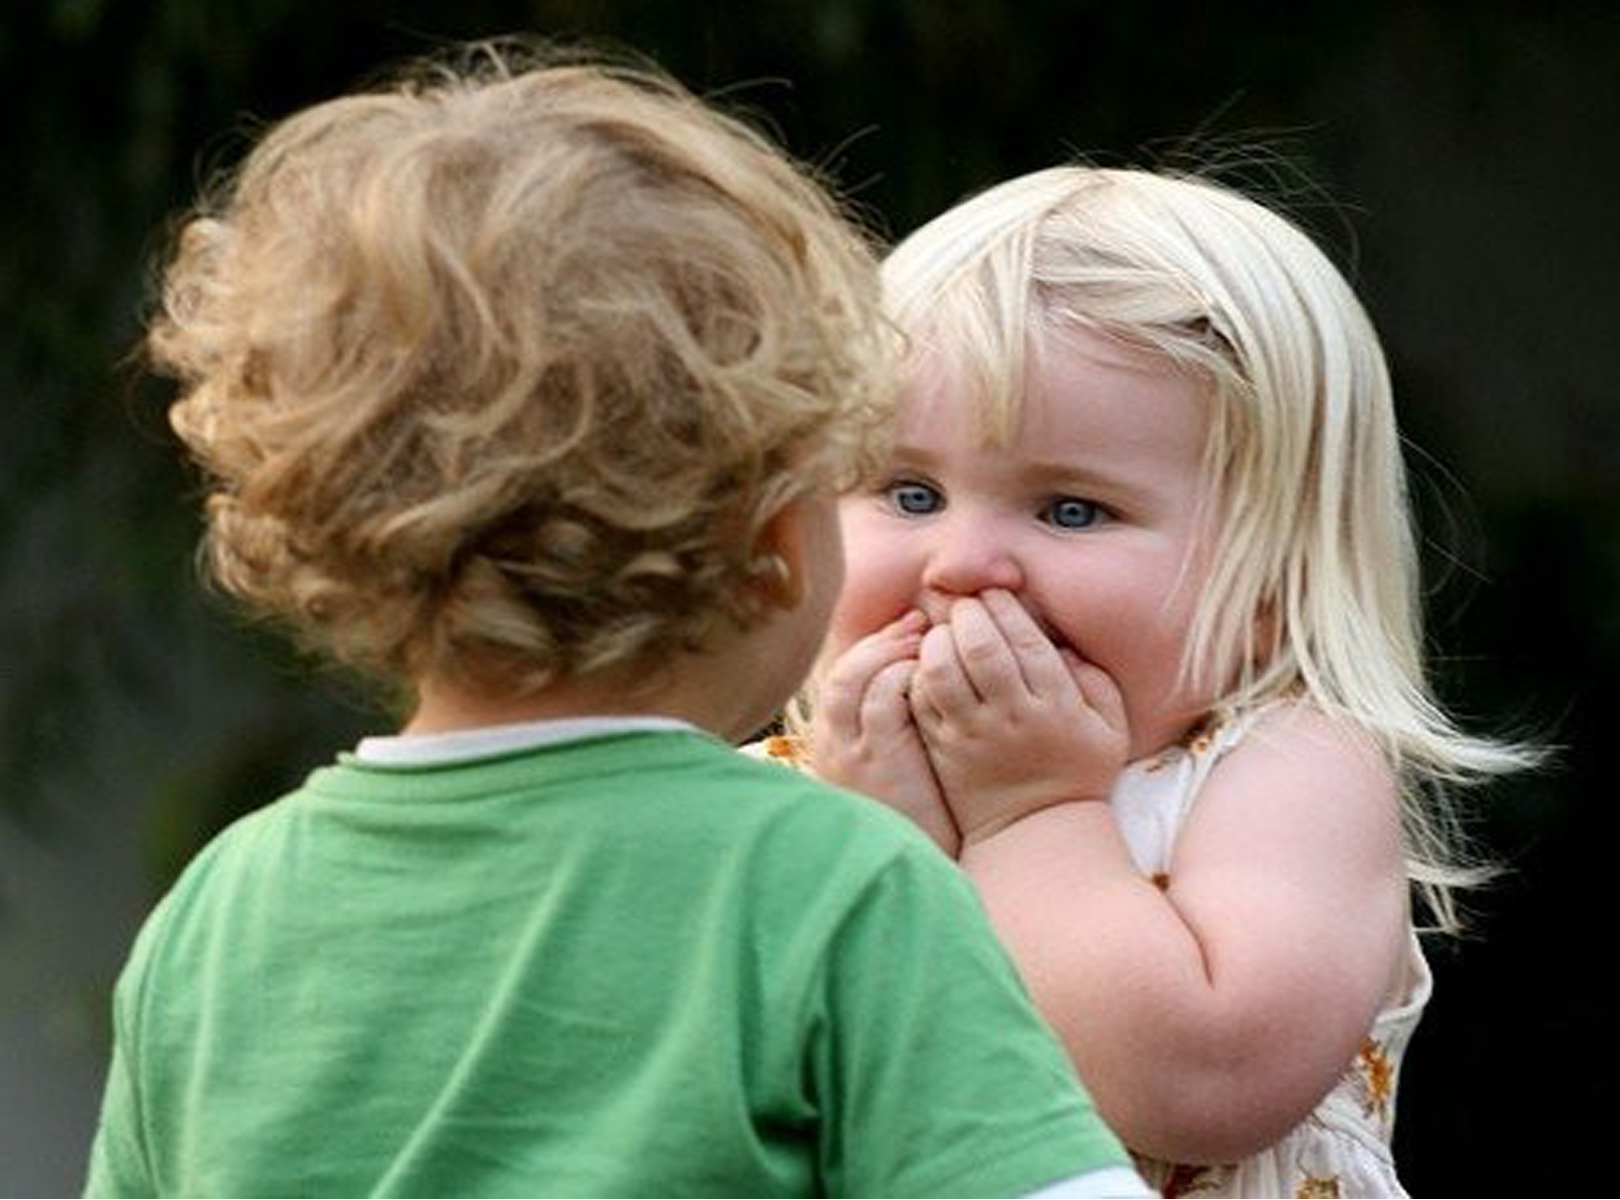 Cute Baby Hands Wallpaper Child Nose Skin Cheek Interaction